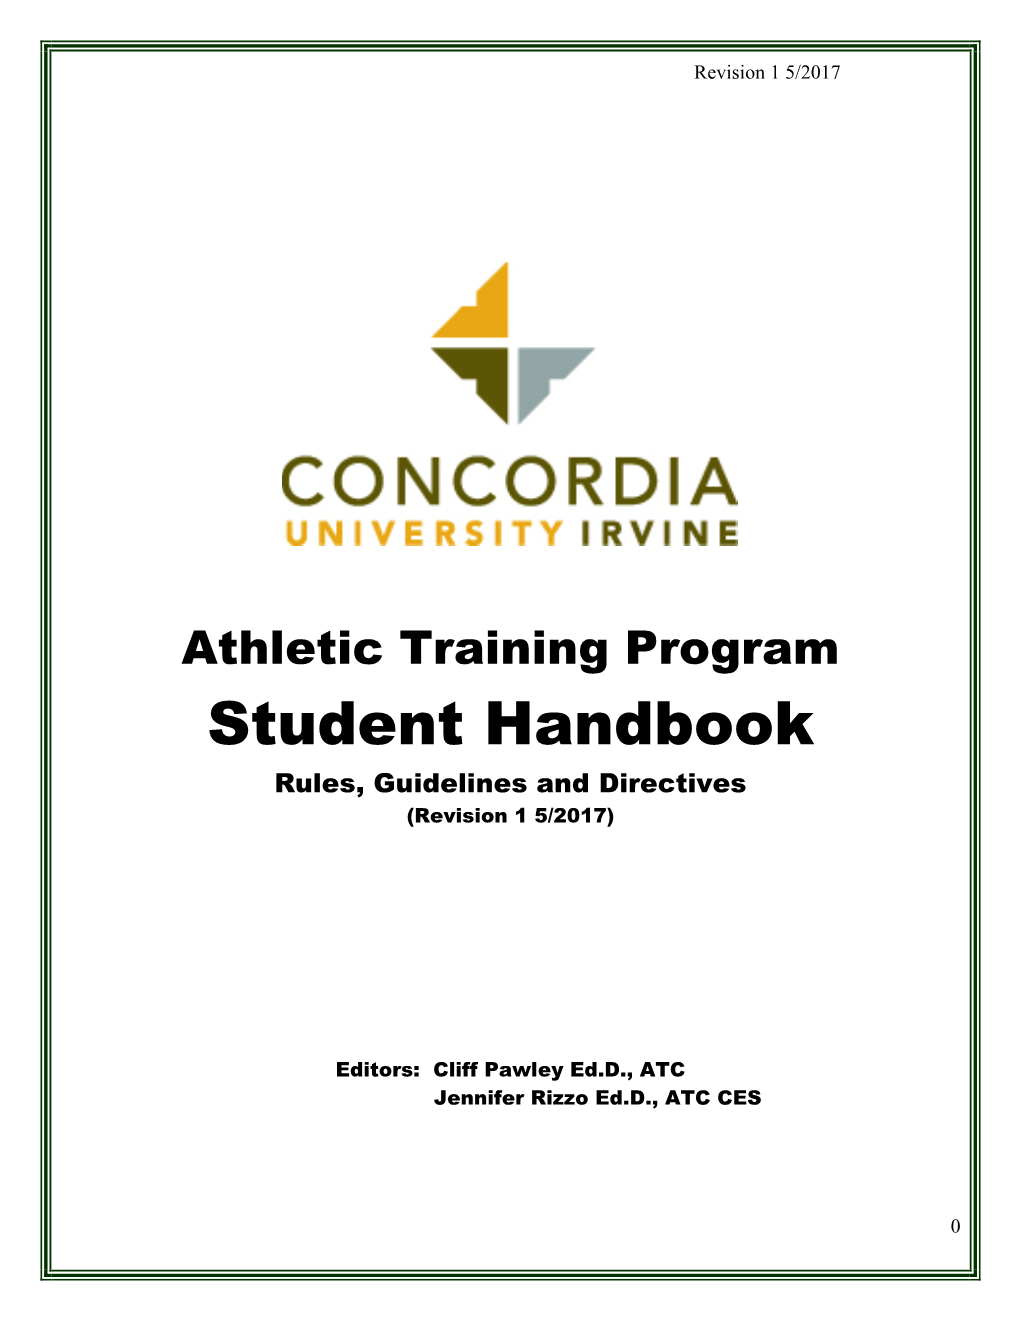 Concordia University Irvine Athletic Training Education Program